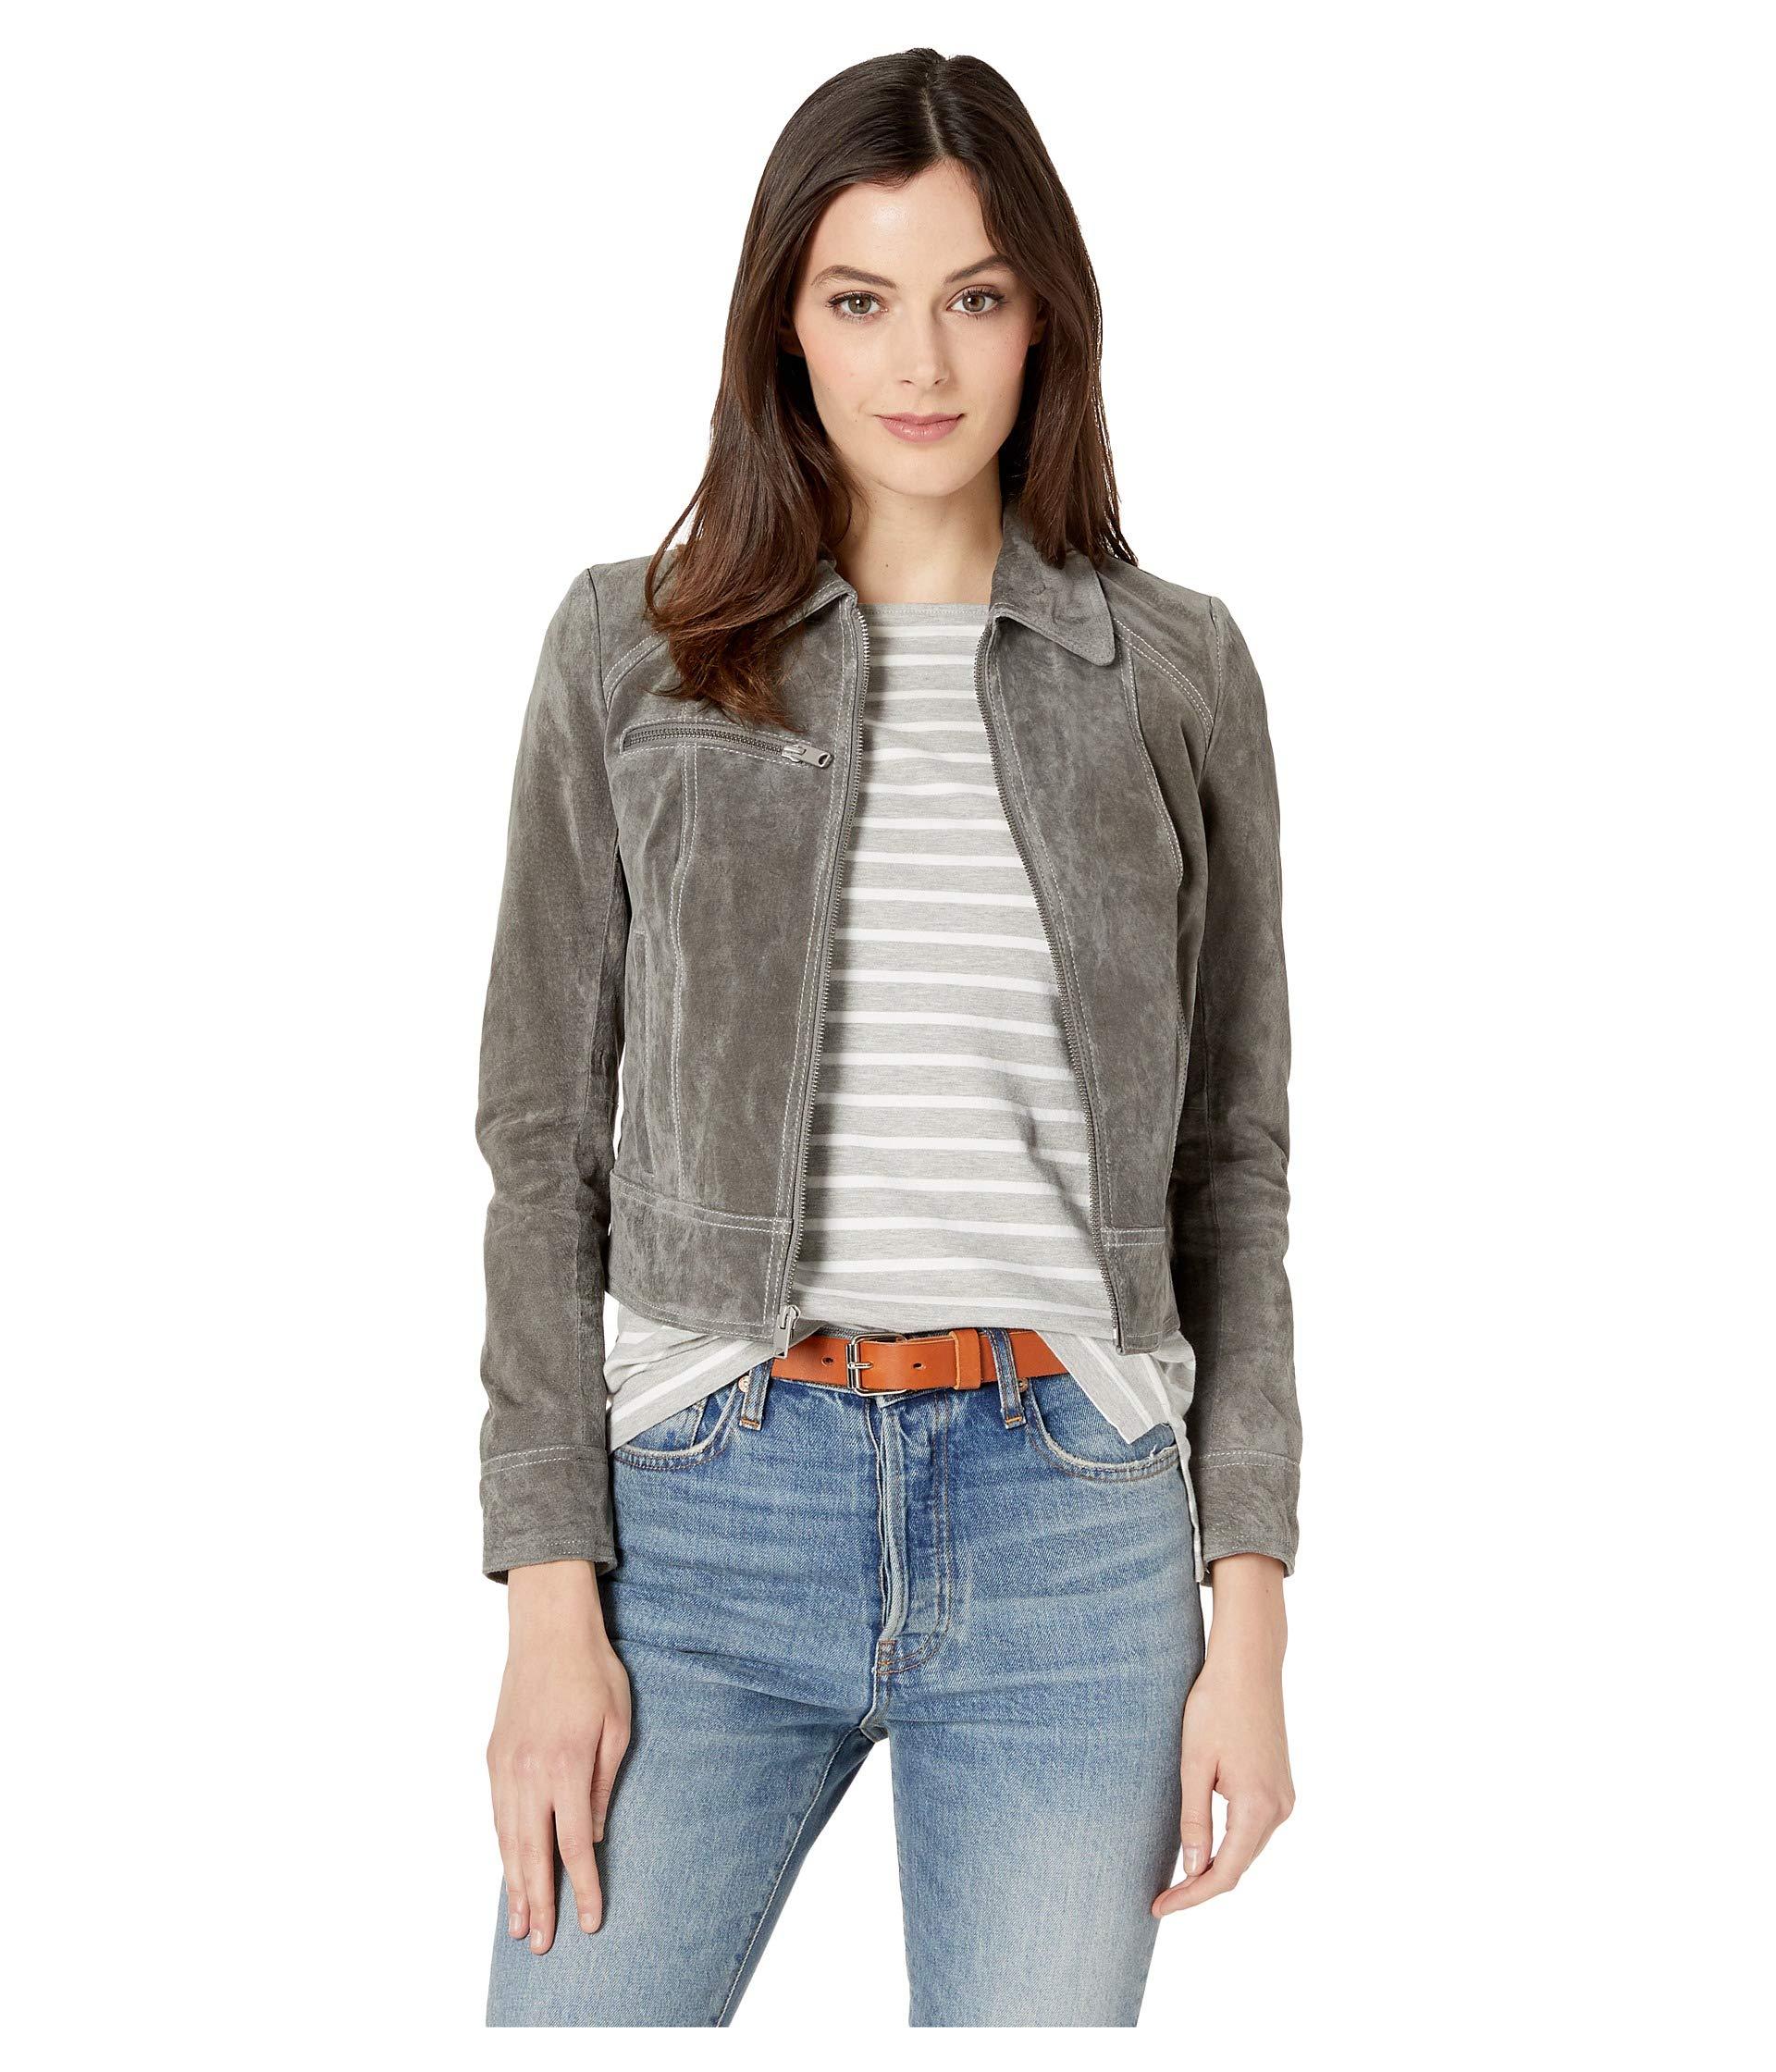 Lyst - Marc New York Ripley Suede Trucker Jacket W/ Front Zip Pocket (grey) Women's Clothing in Gray